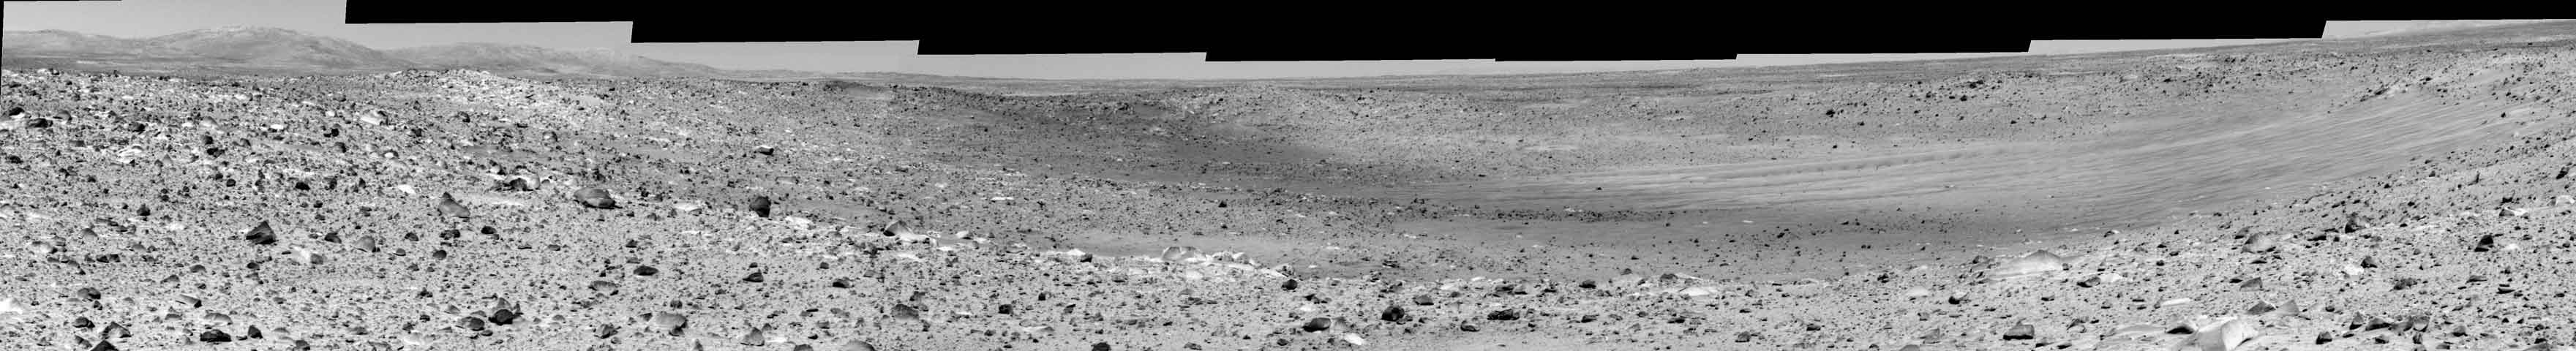 Missoula Cratere su Marte